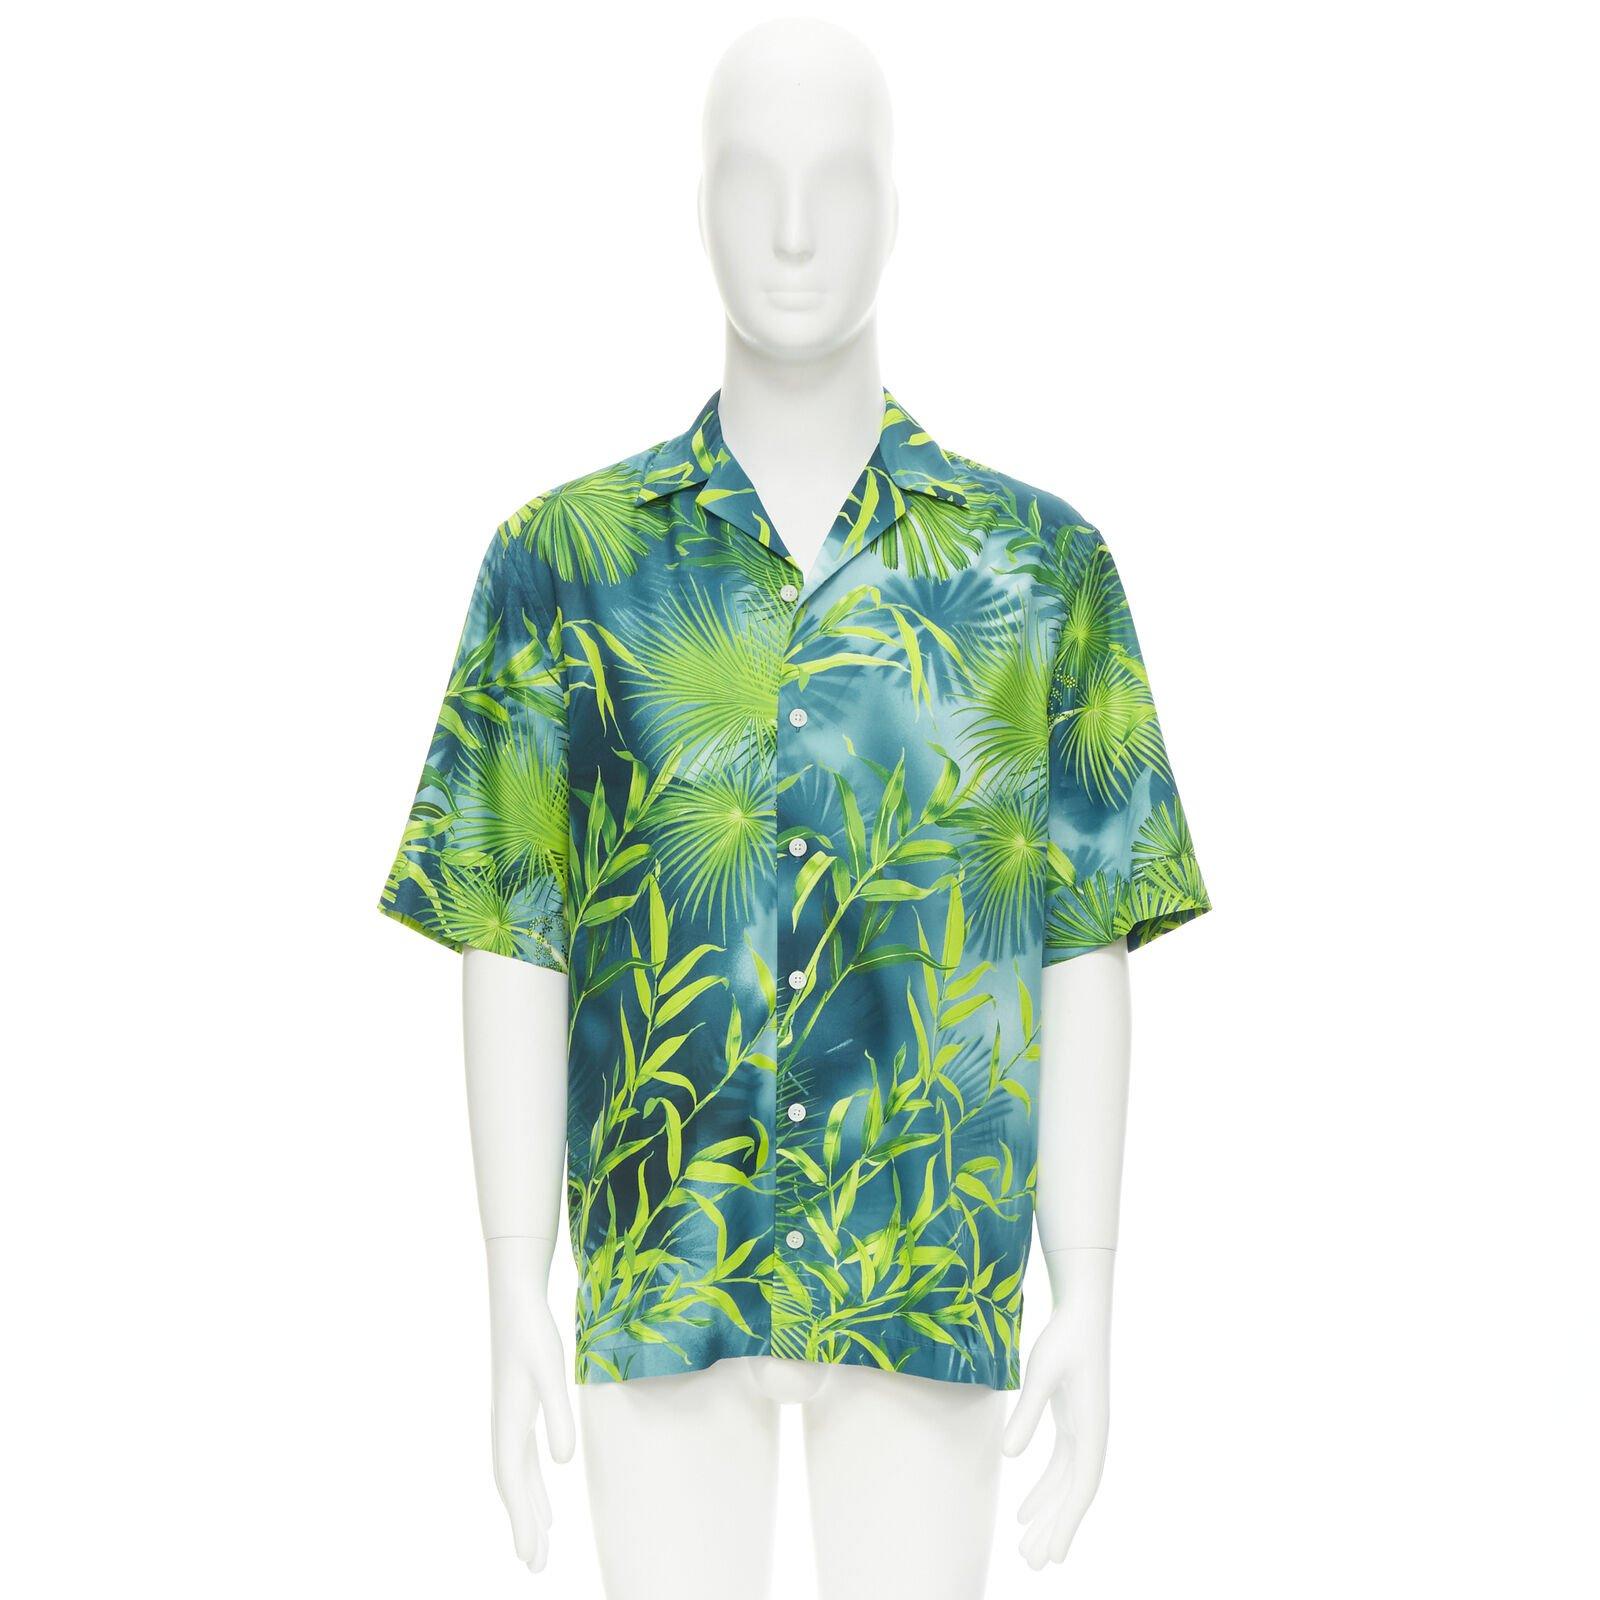 VERSACE 2020 Iconic JLo Jungle print green tropical print shirt EU41 XL For Sale 6